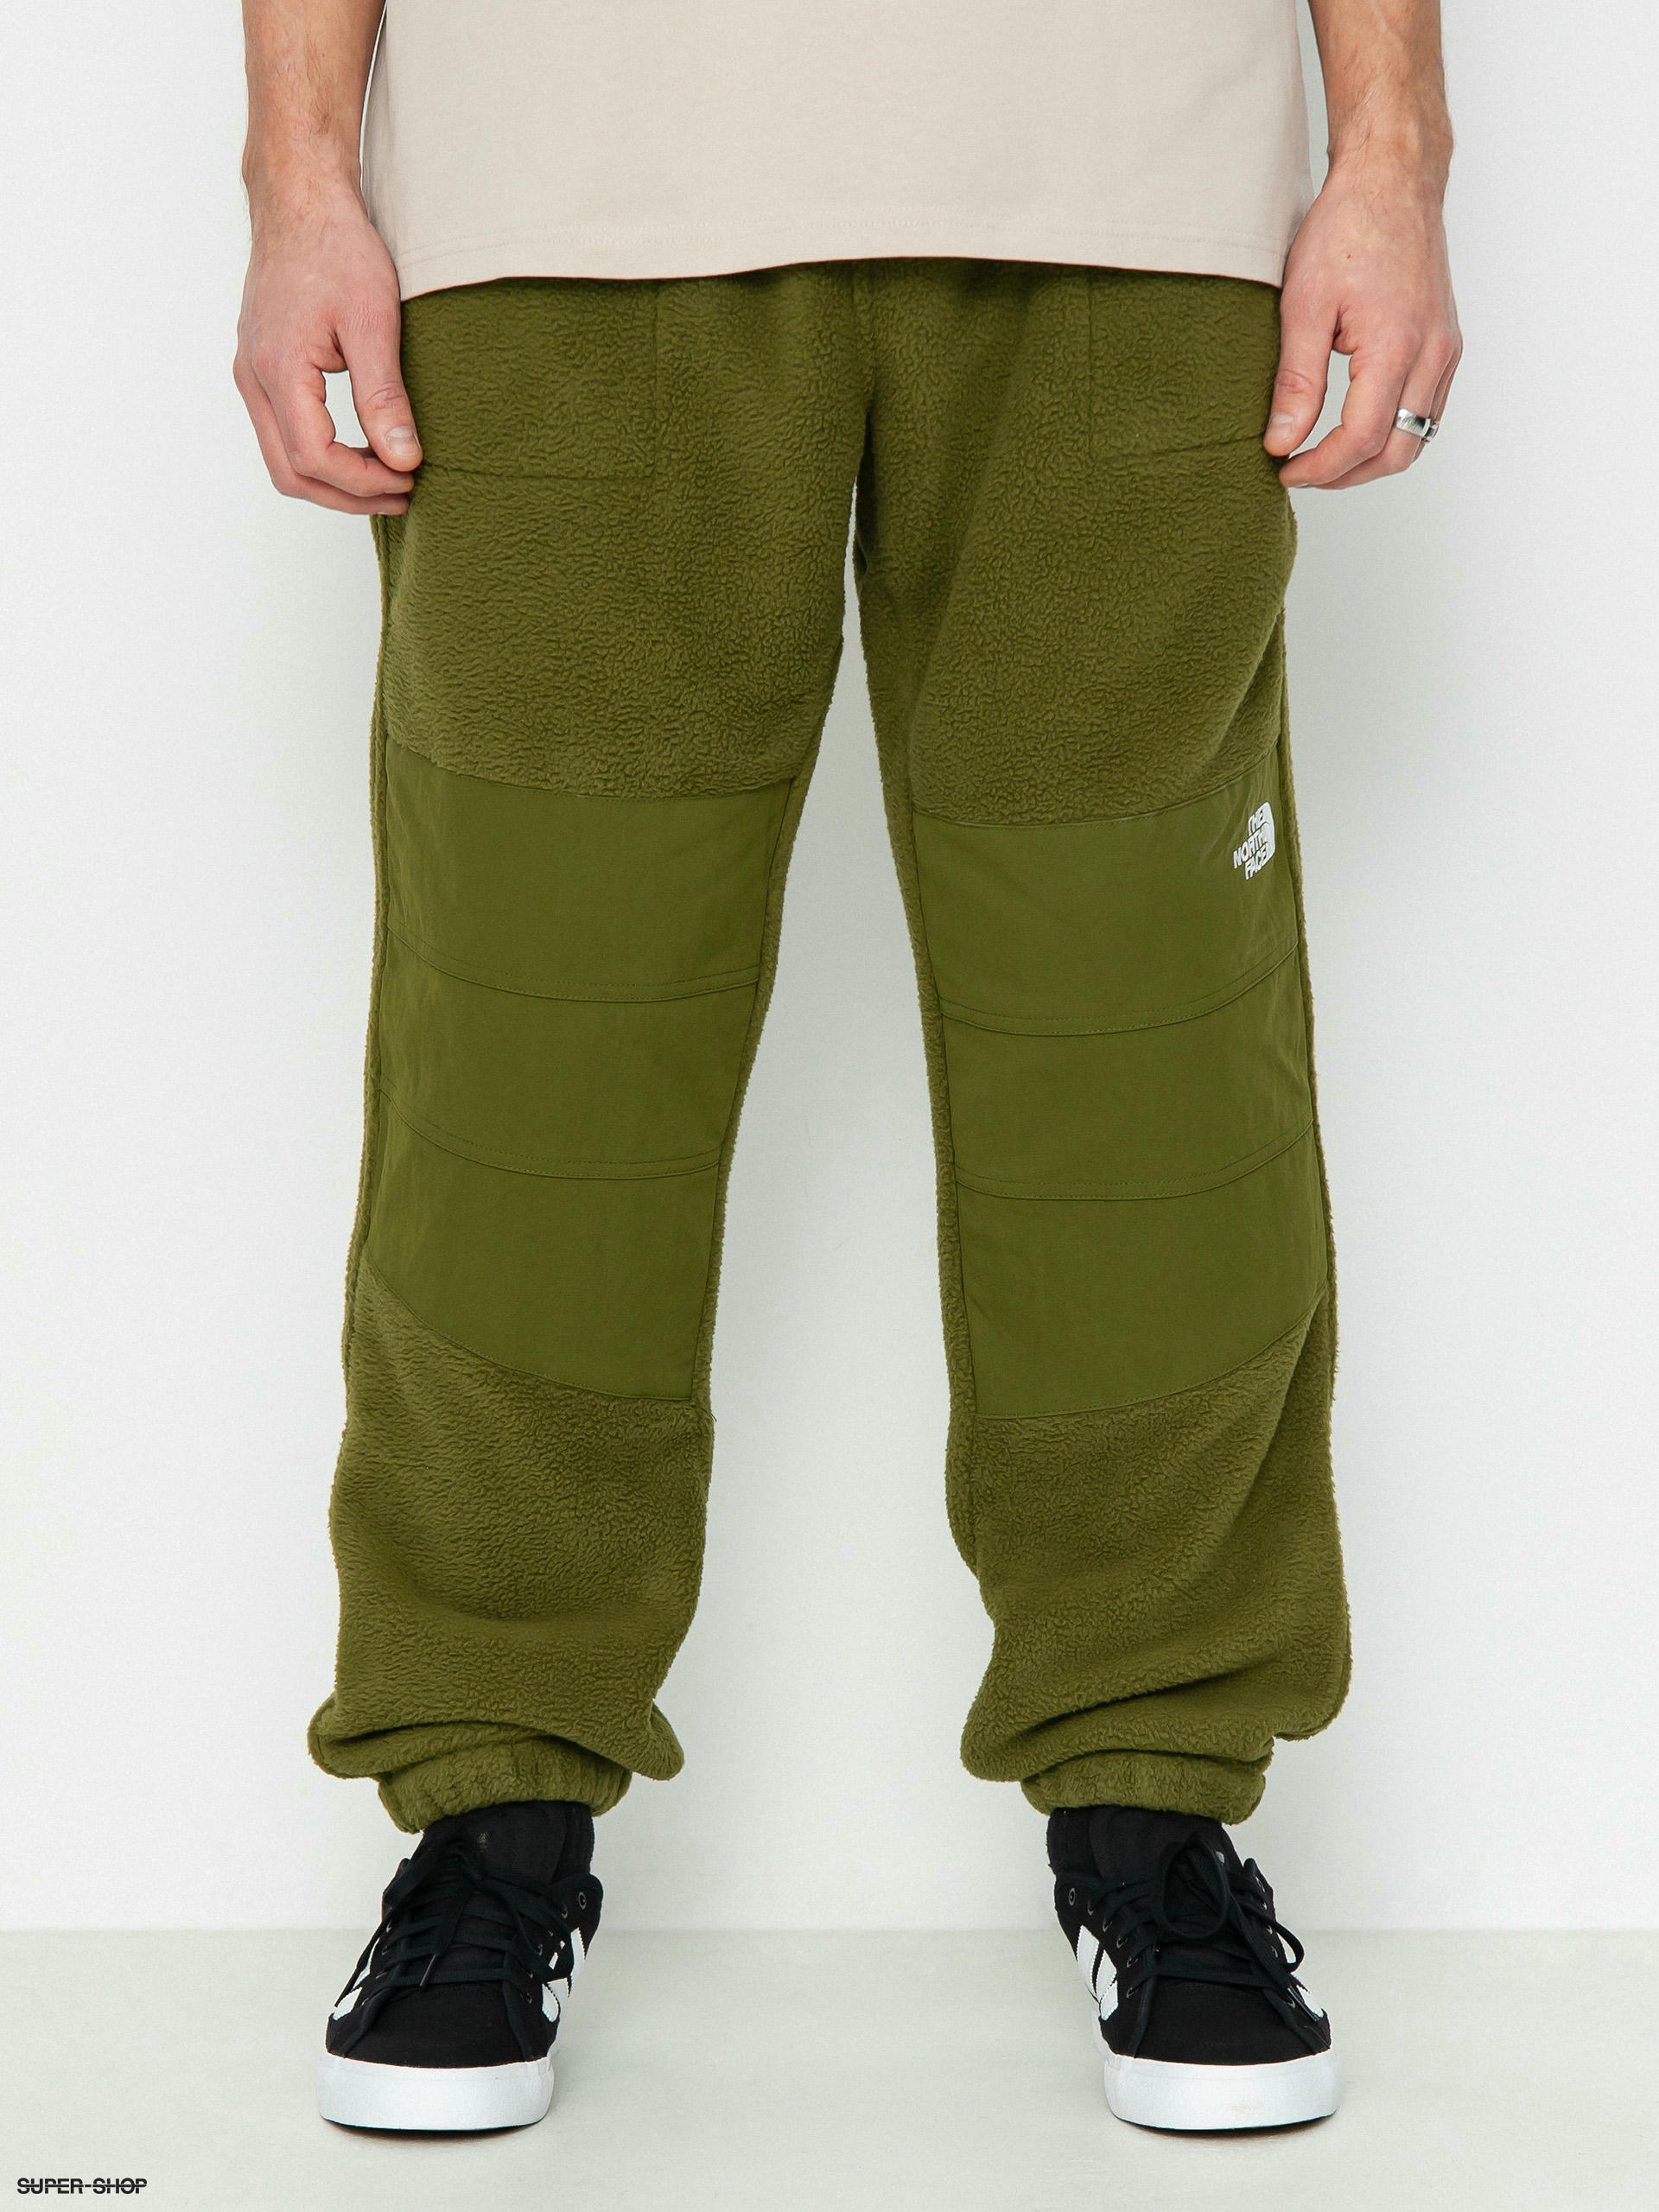 The North Face Transformer Cargo Pants Combat Shorts | eBay